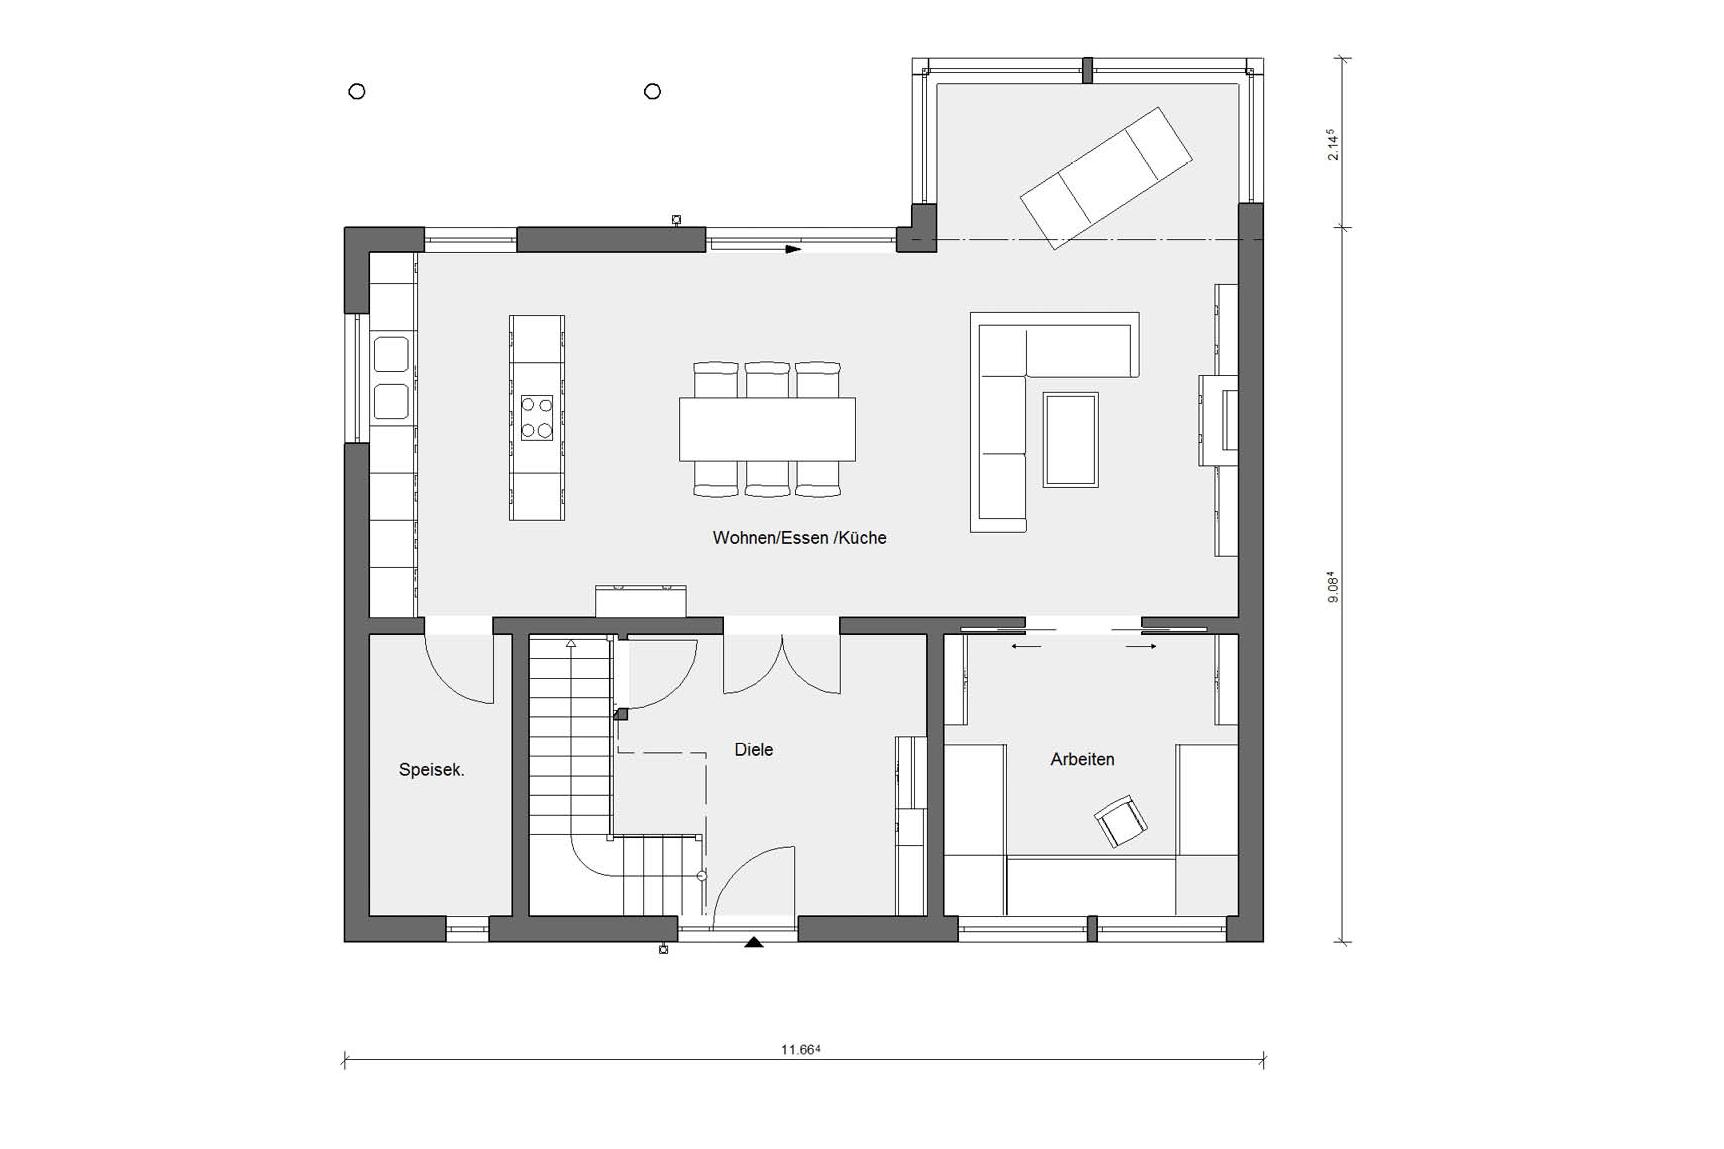 Ground floor plan E 20-192.1 House on a hillside